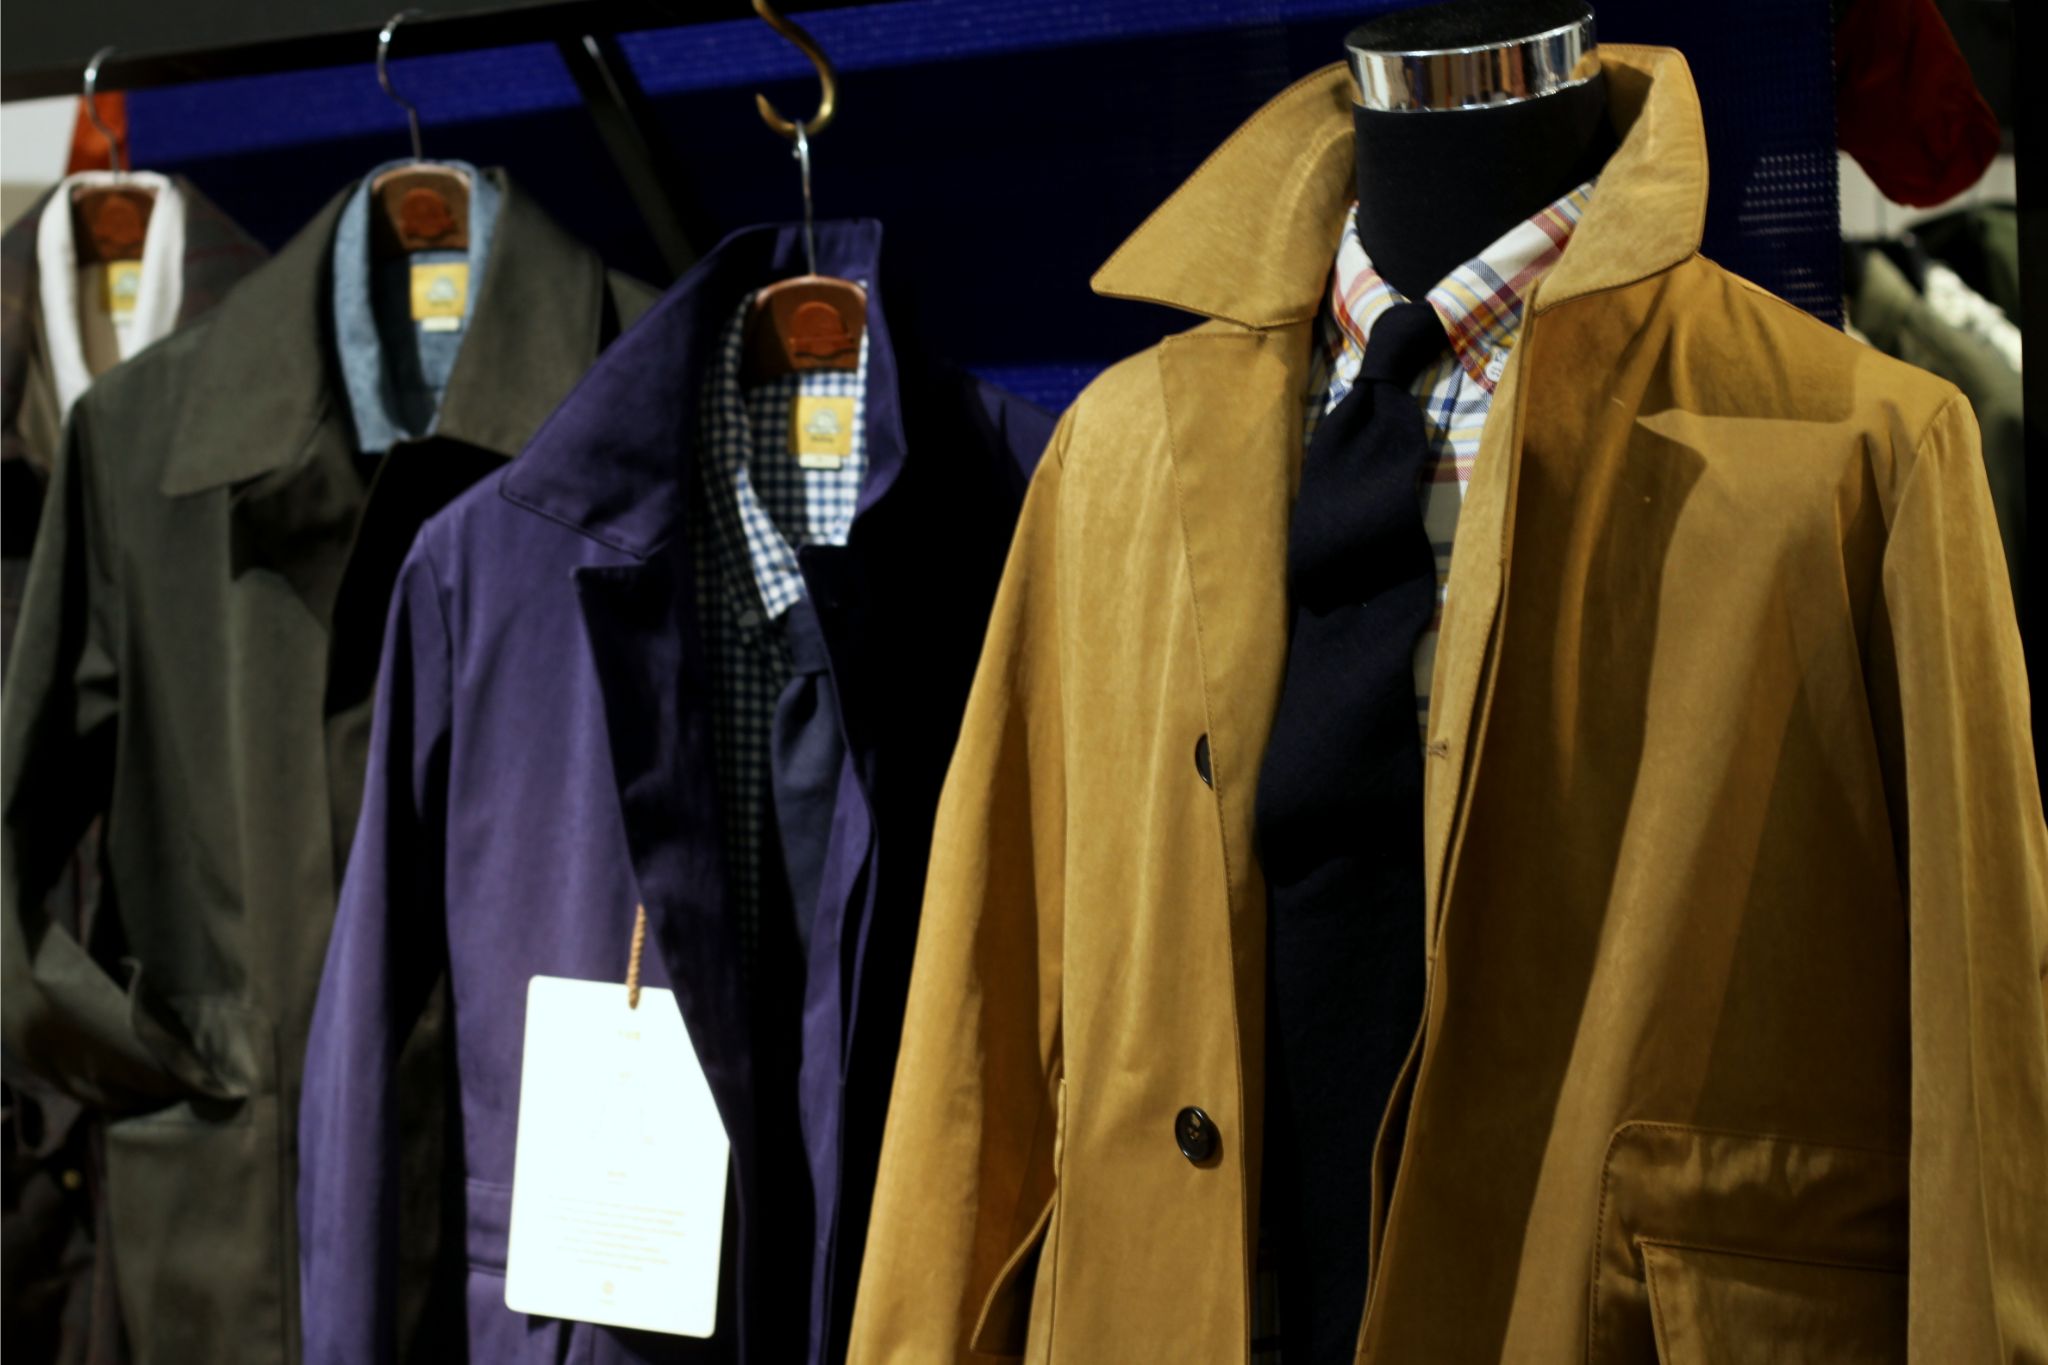 Bastong SS16 - outerwear presented at Pitti Uomo 88